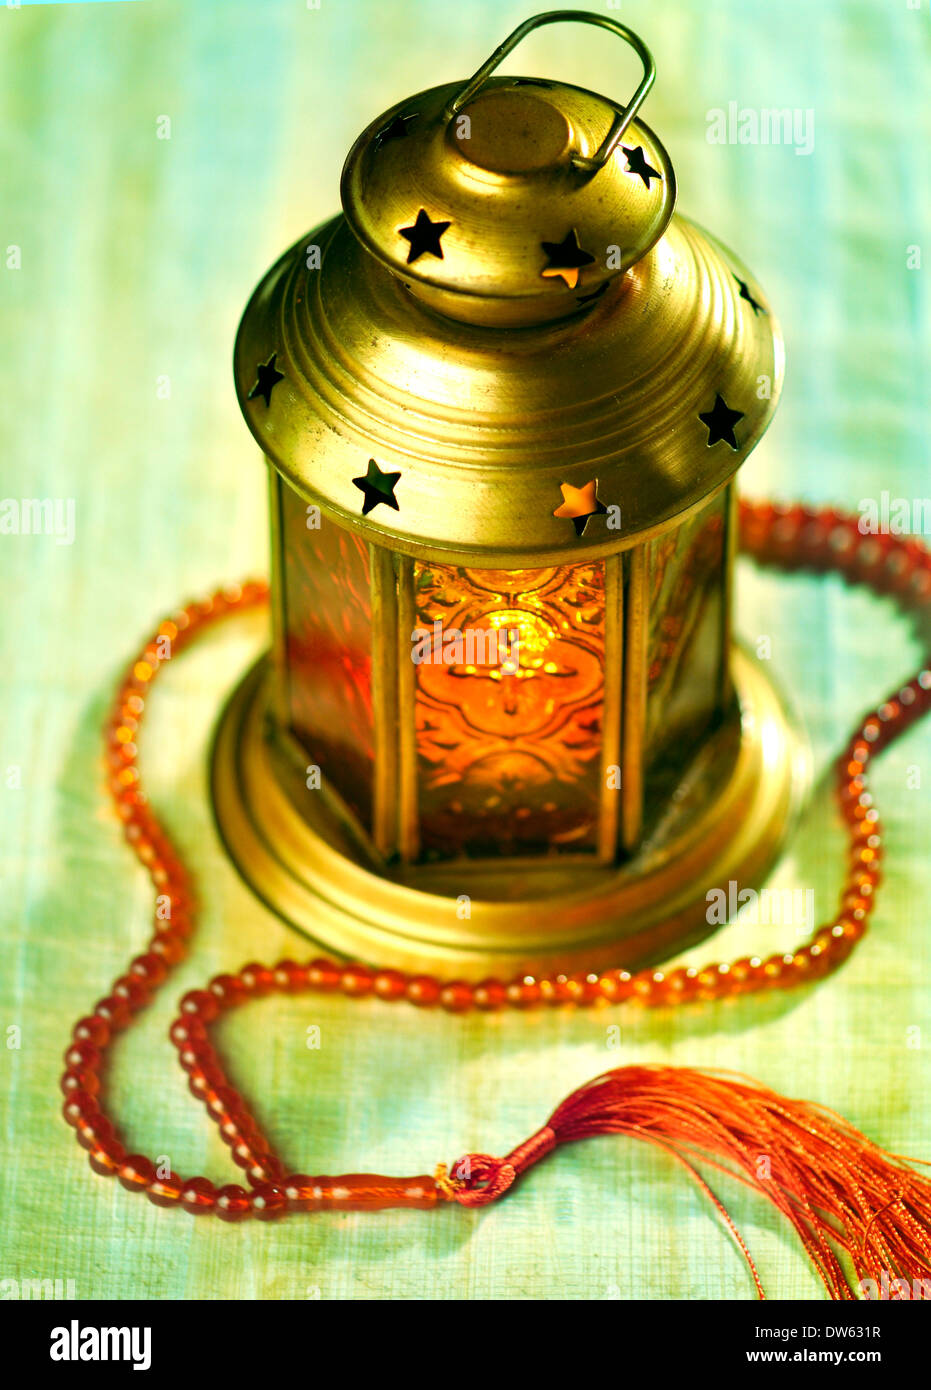 Ramadan lamp hi-res stock photography and images - Alamy